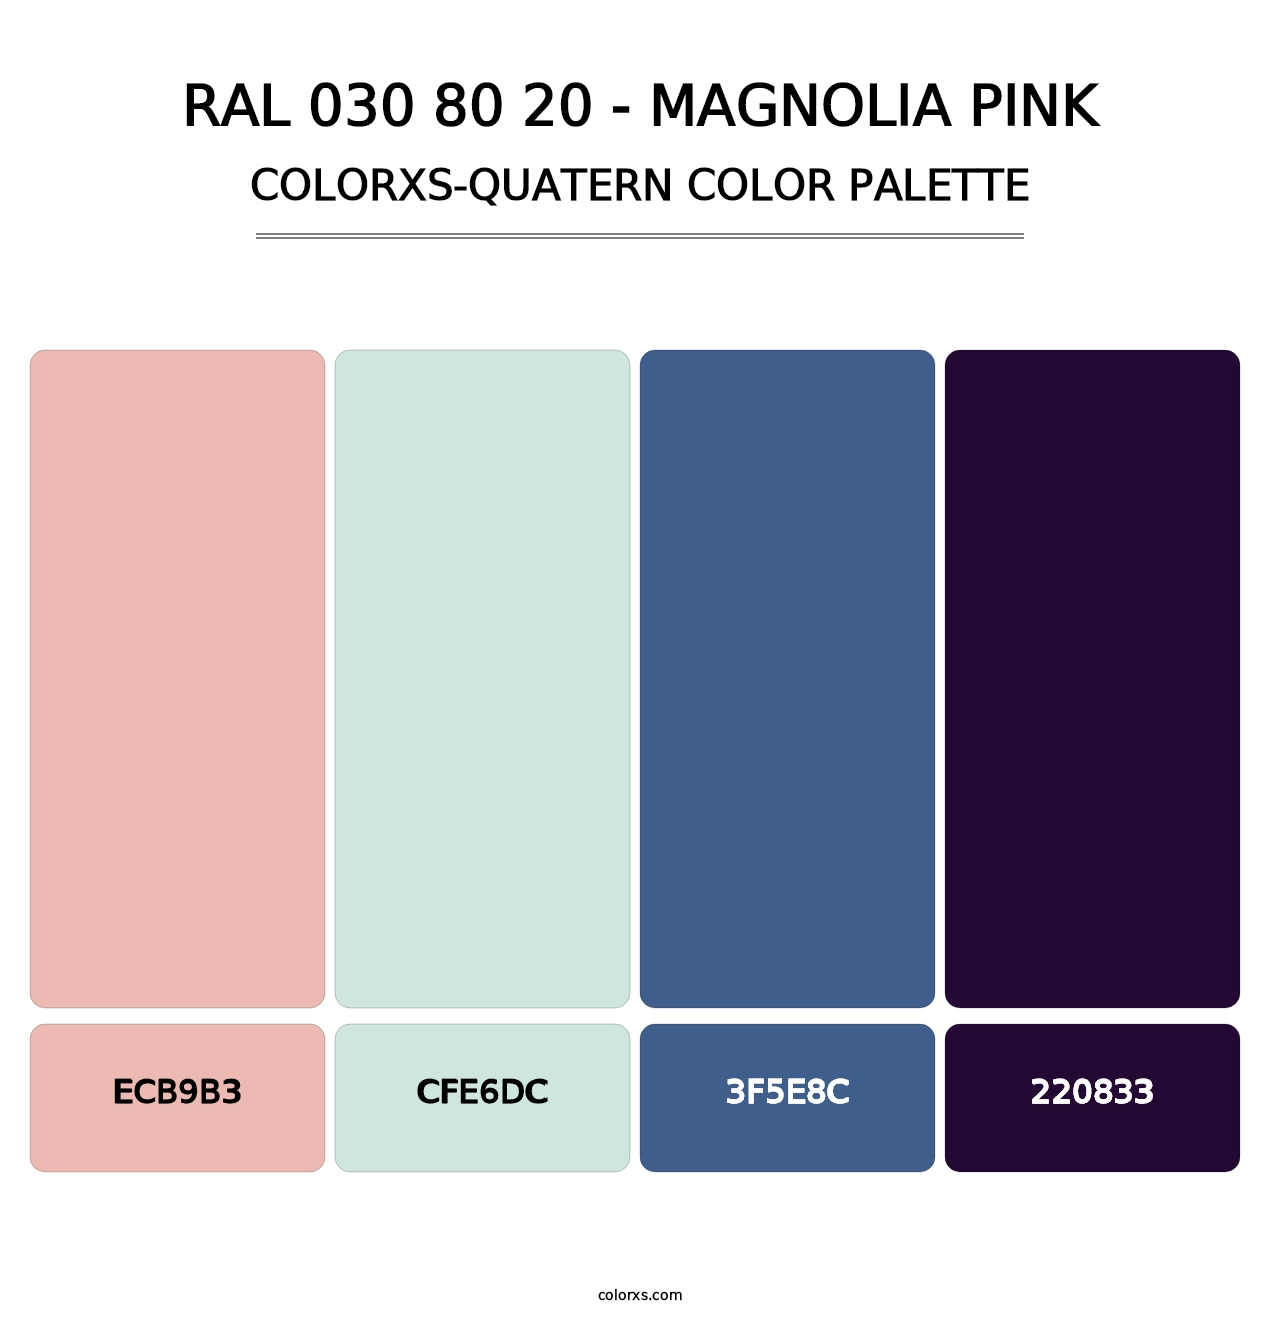 RAL 030 80 20 - Magnolia Pink - Colorxs Quatern Palette